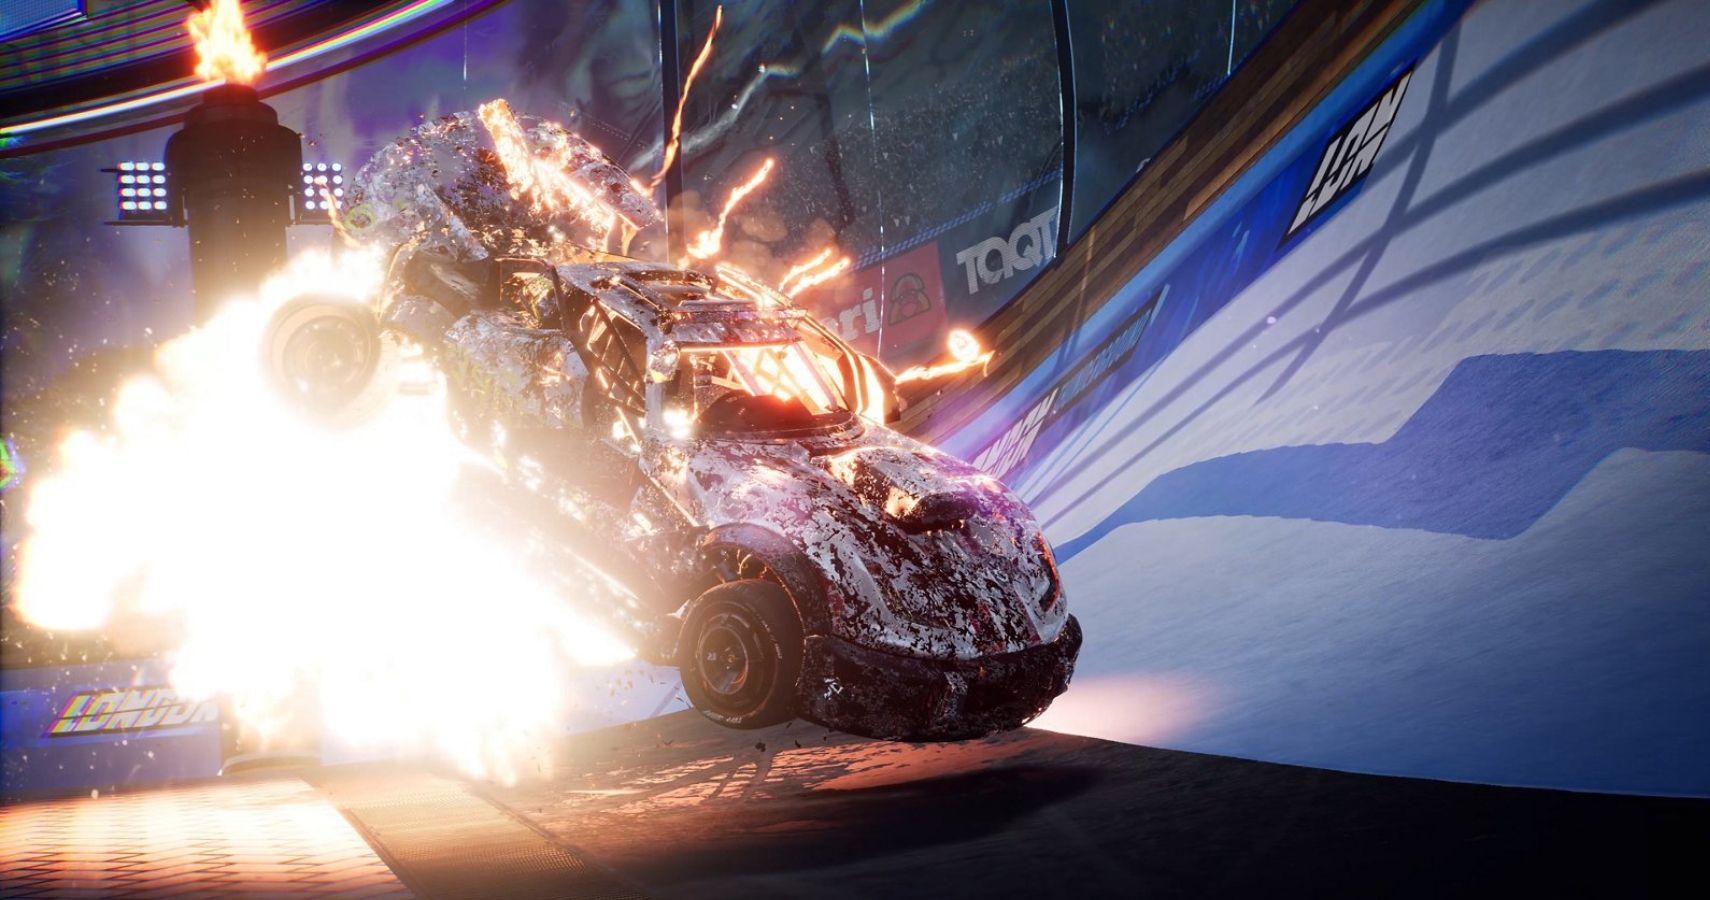 An exploding car